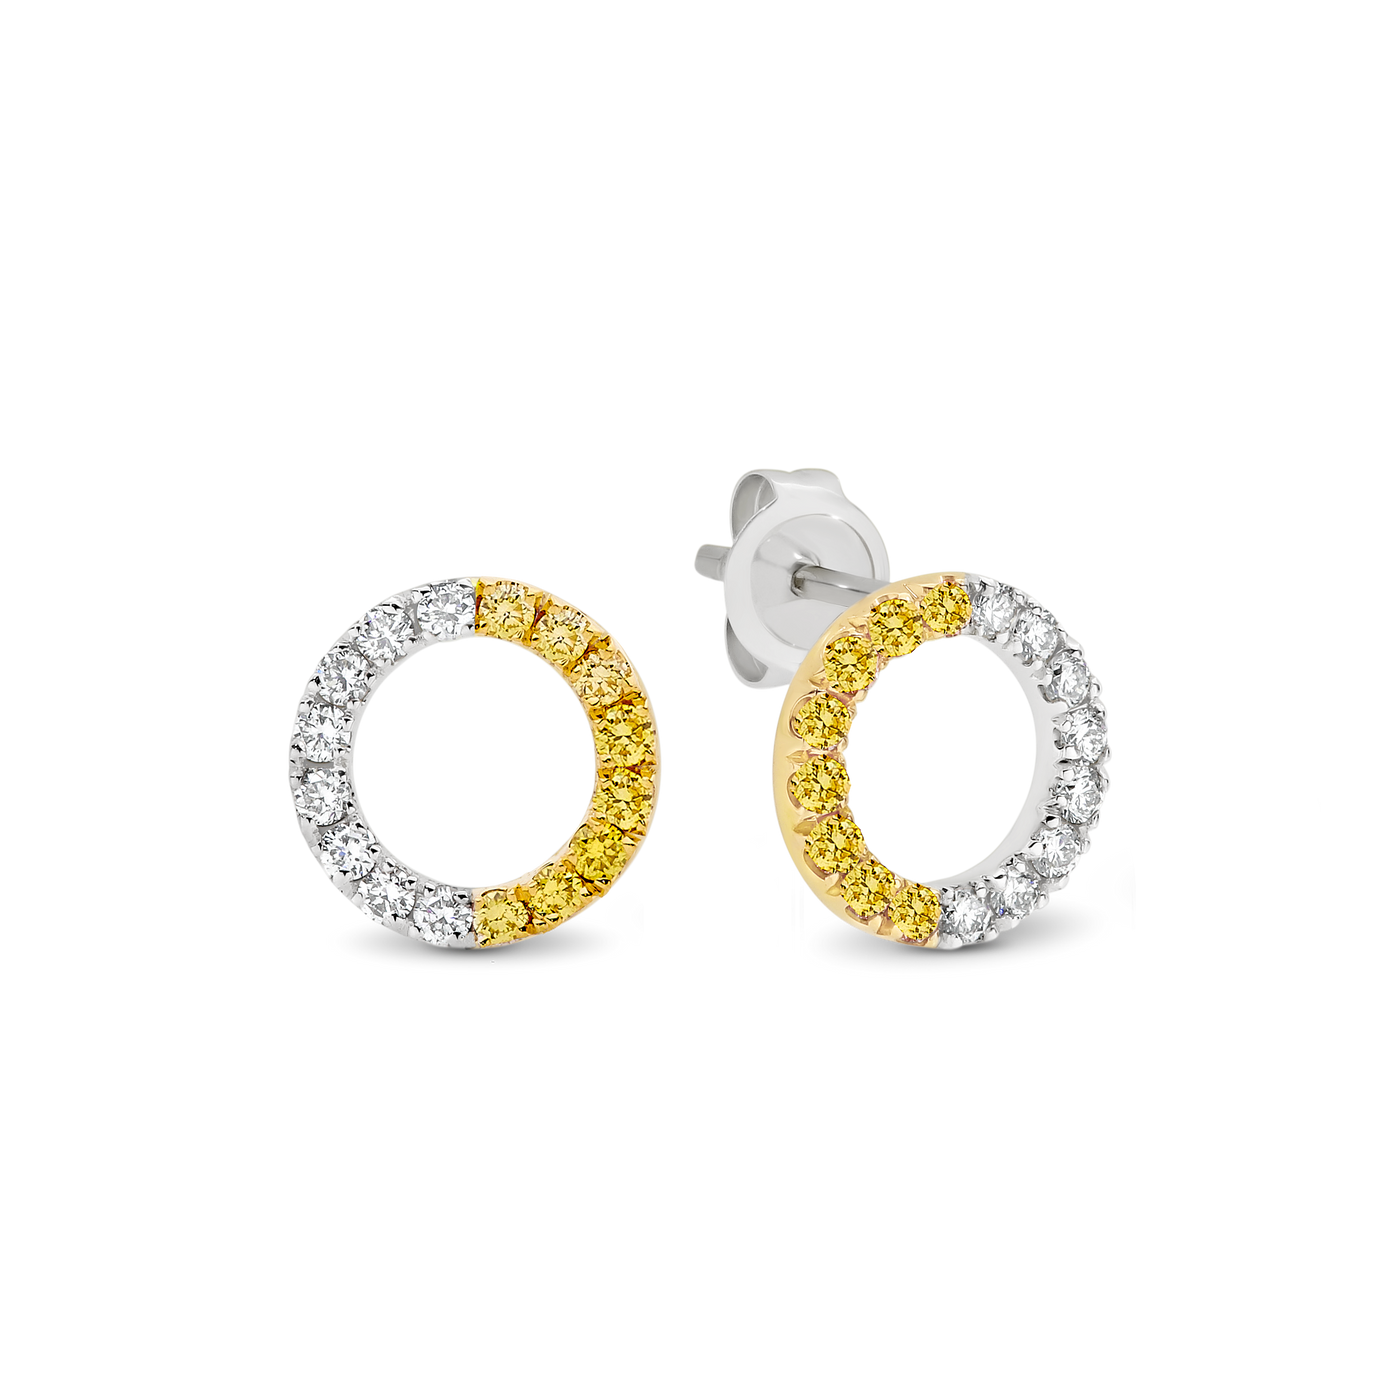 18ct White & Yellow Gold Diamond Halo Stud Earrings